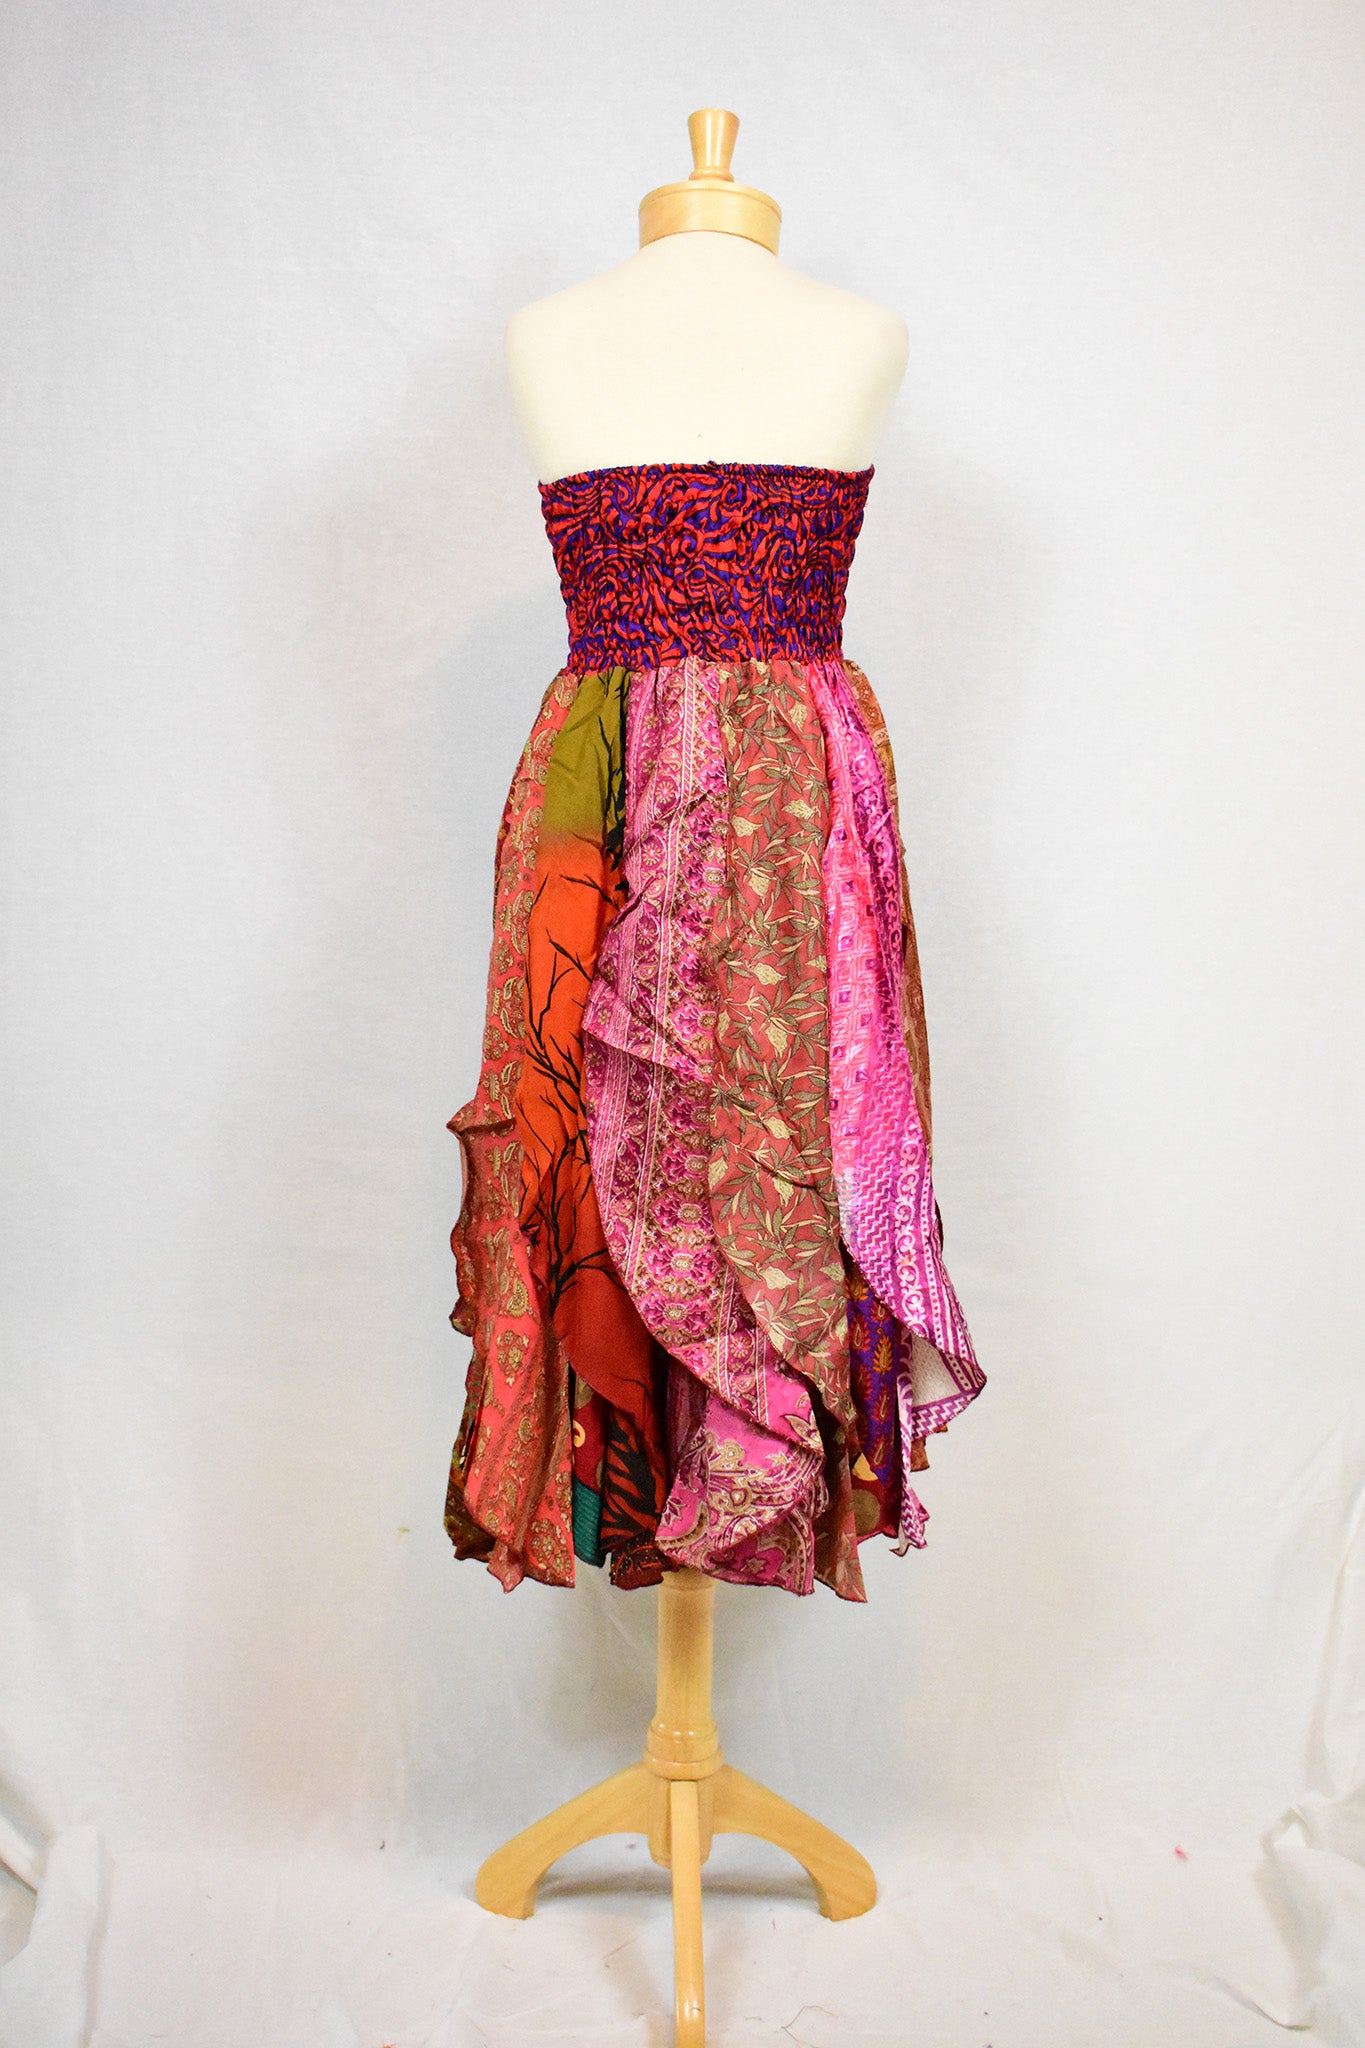 Fairy Dress Ruffle Skirt 4 Back View